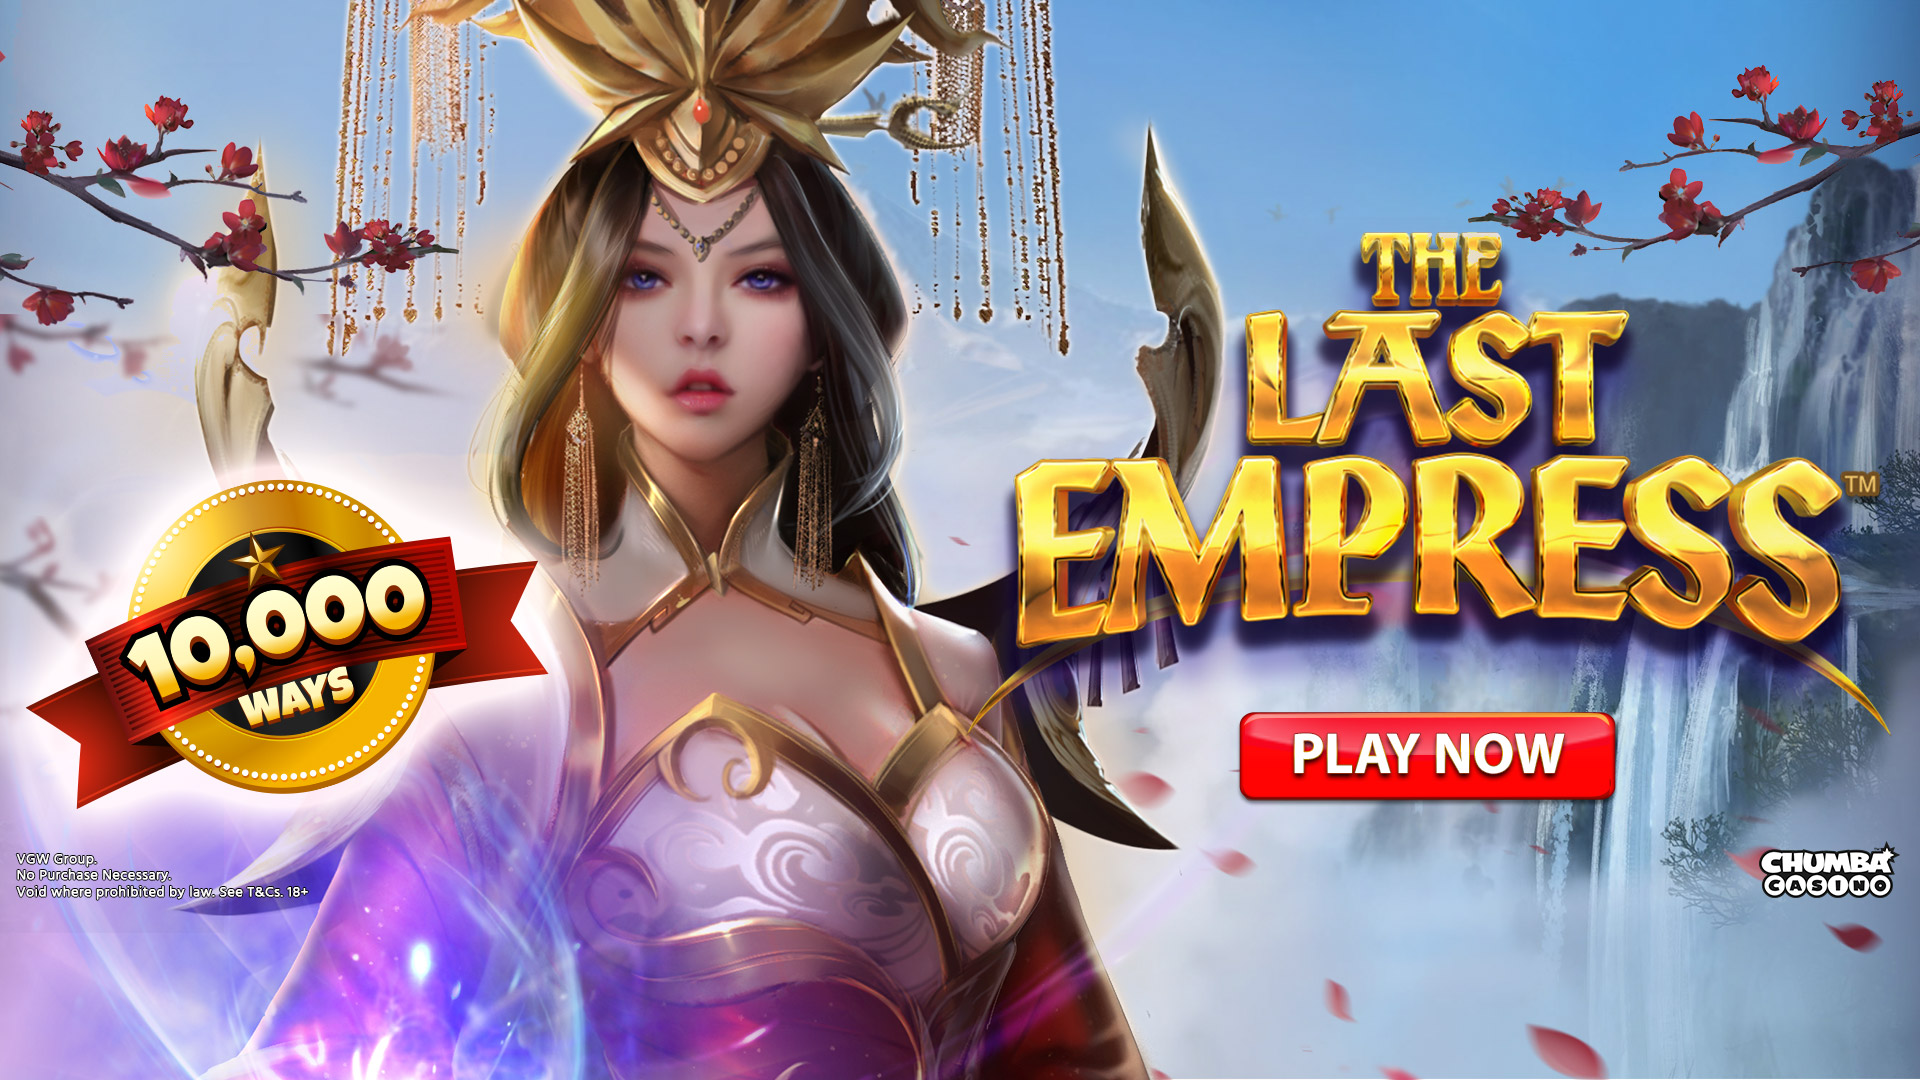 the last empress chumba casino logo game